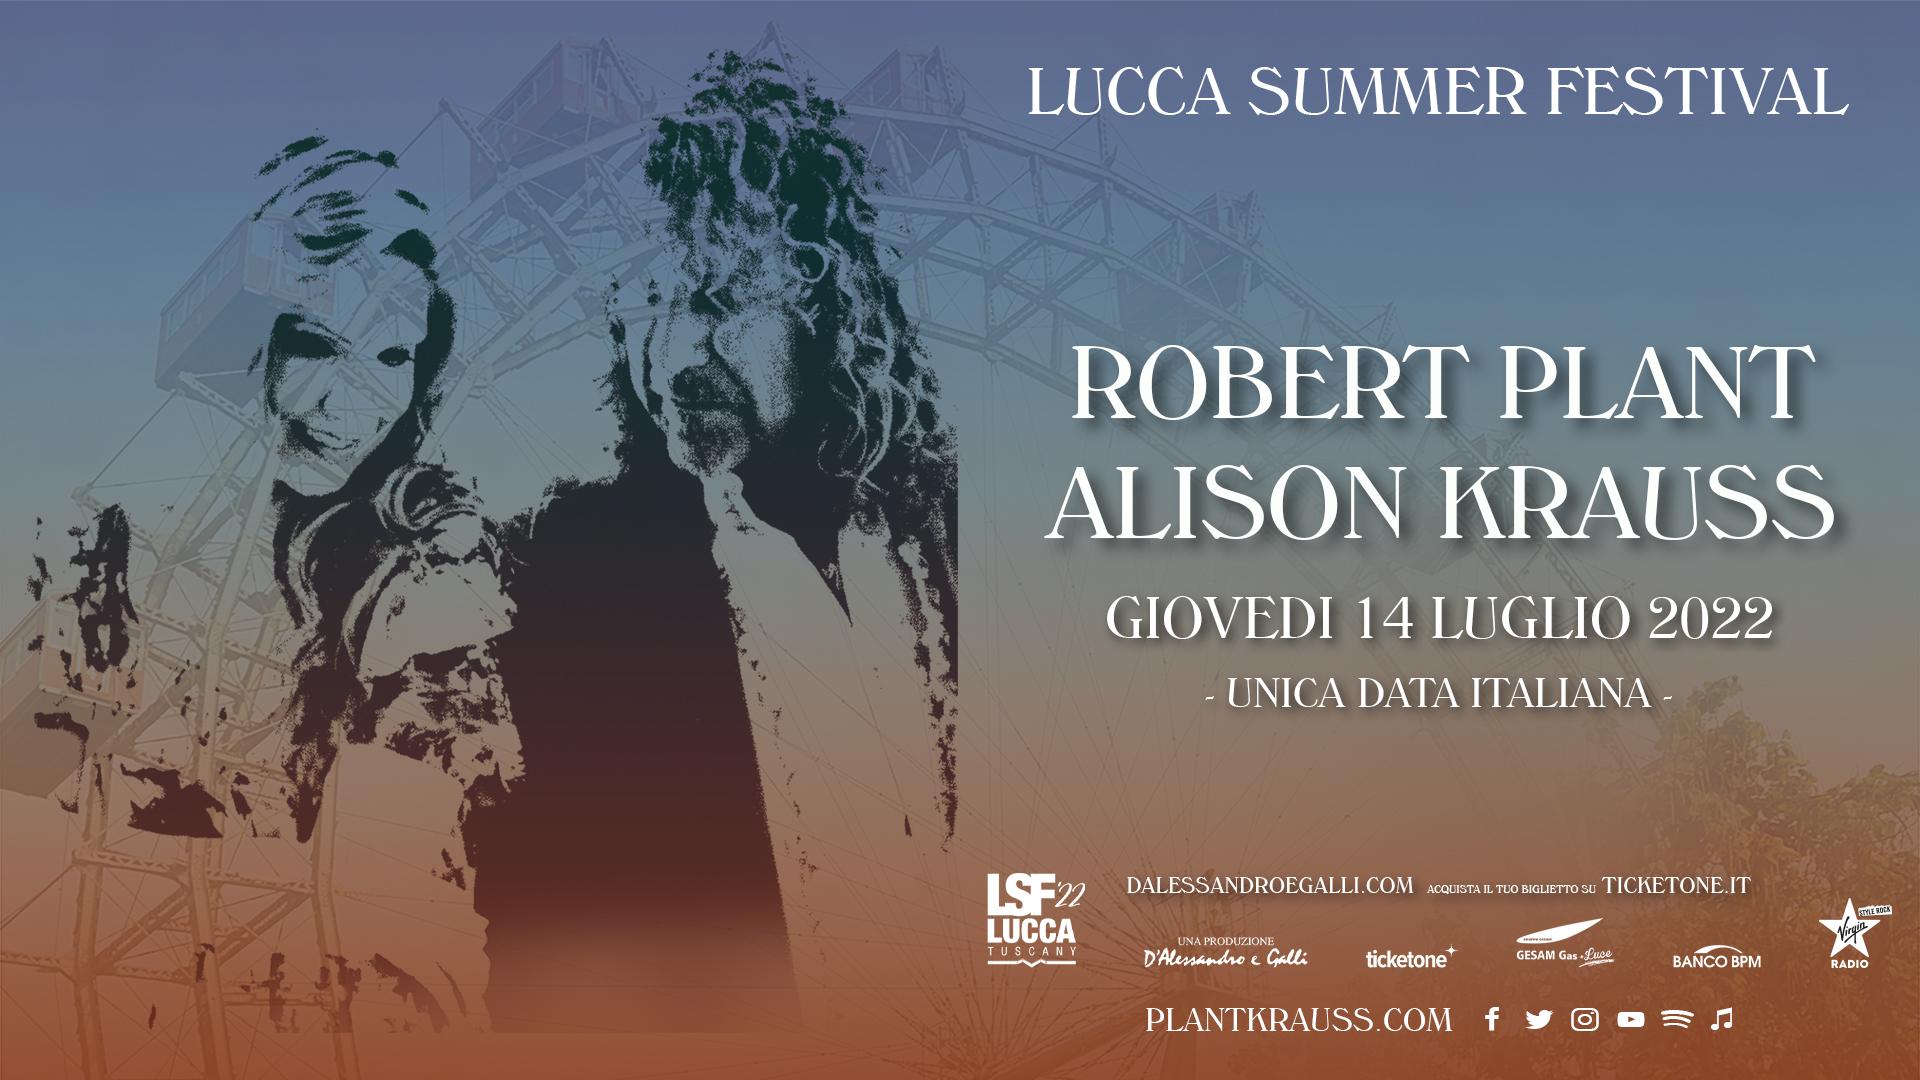 Robert Plant & Alison Krauss Lucca Summer Festival